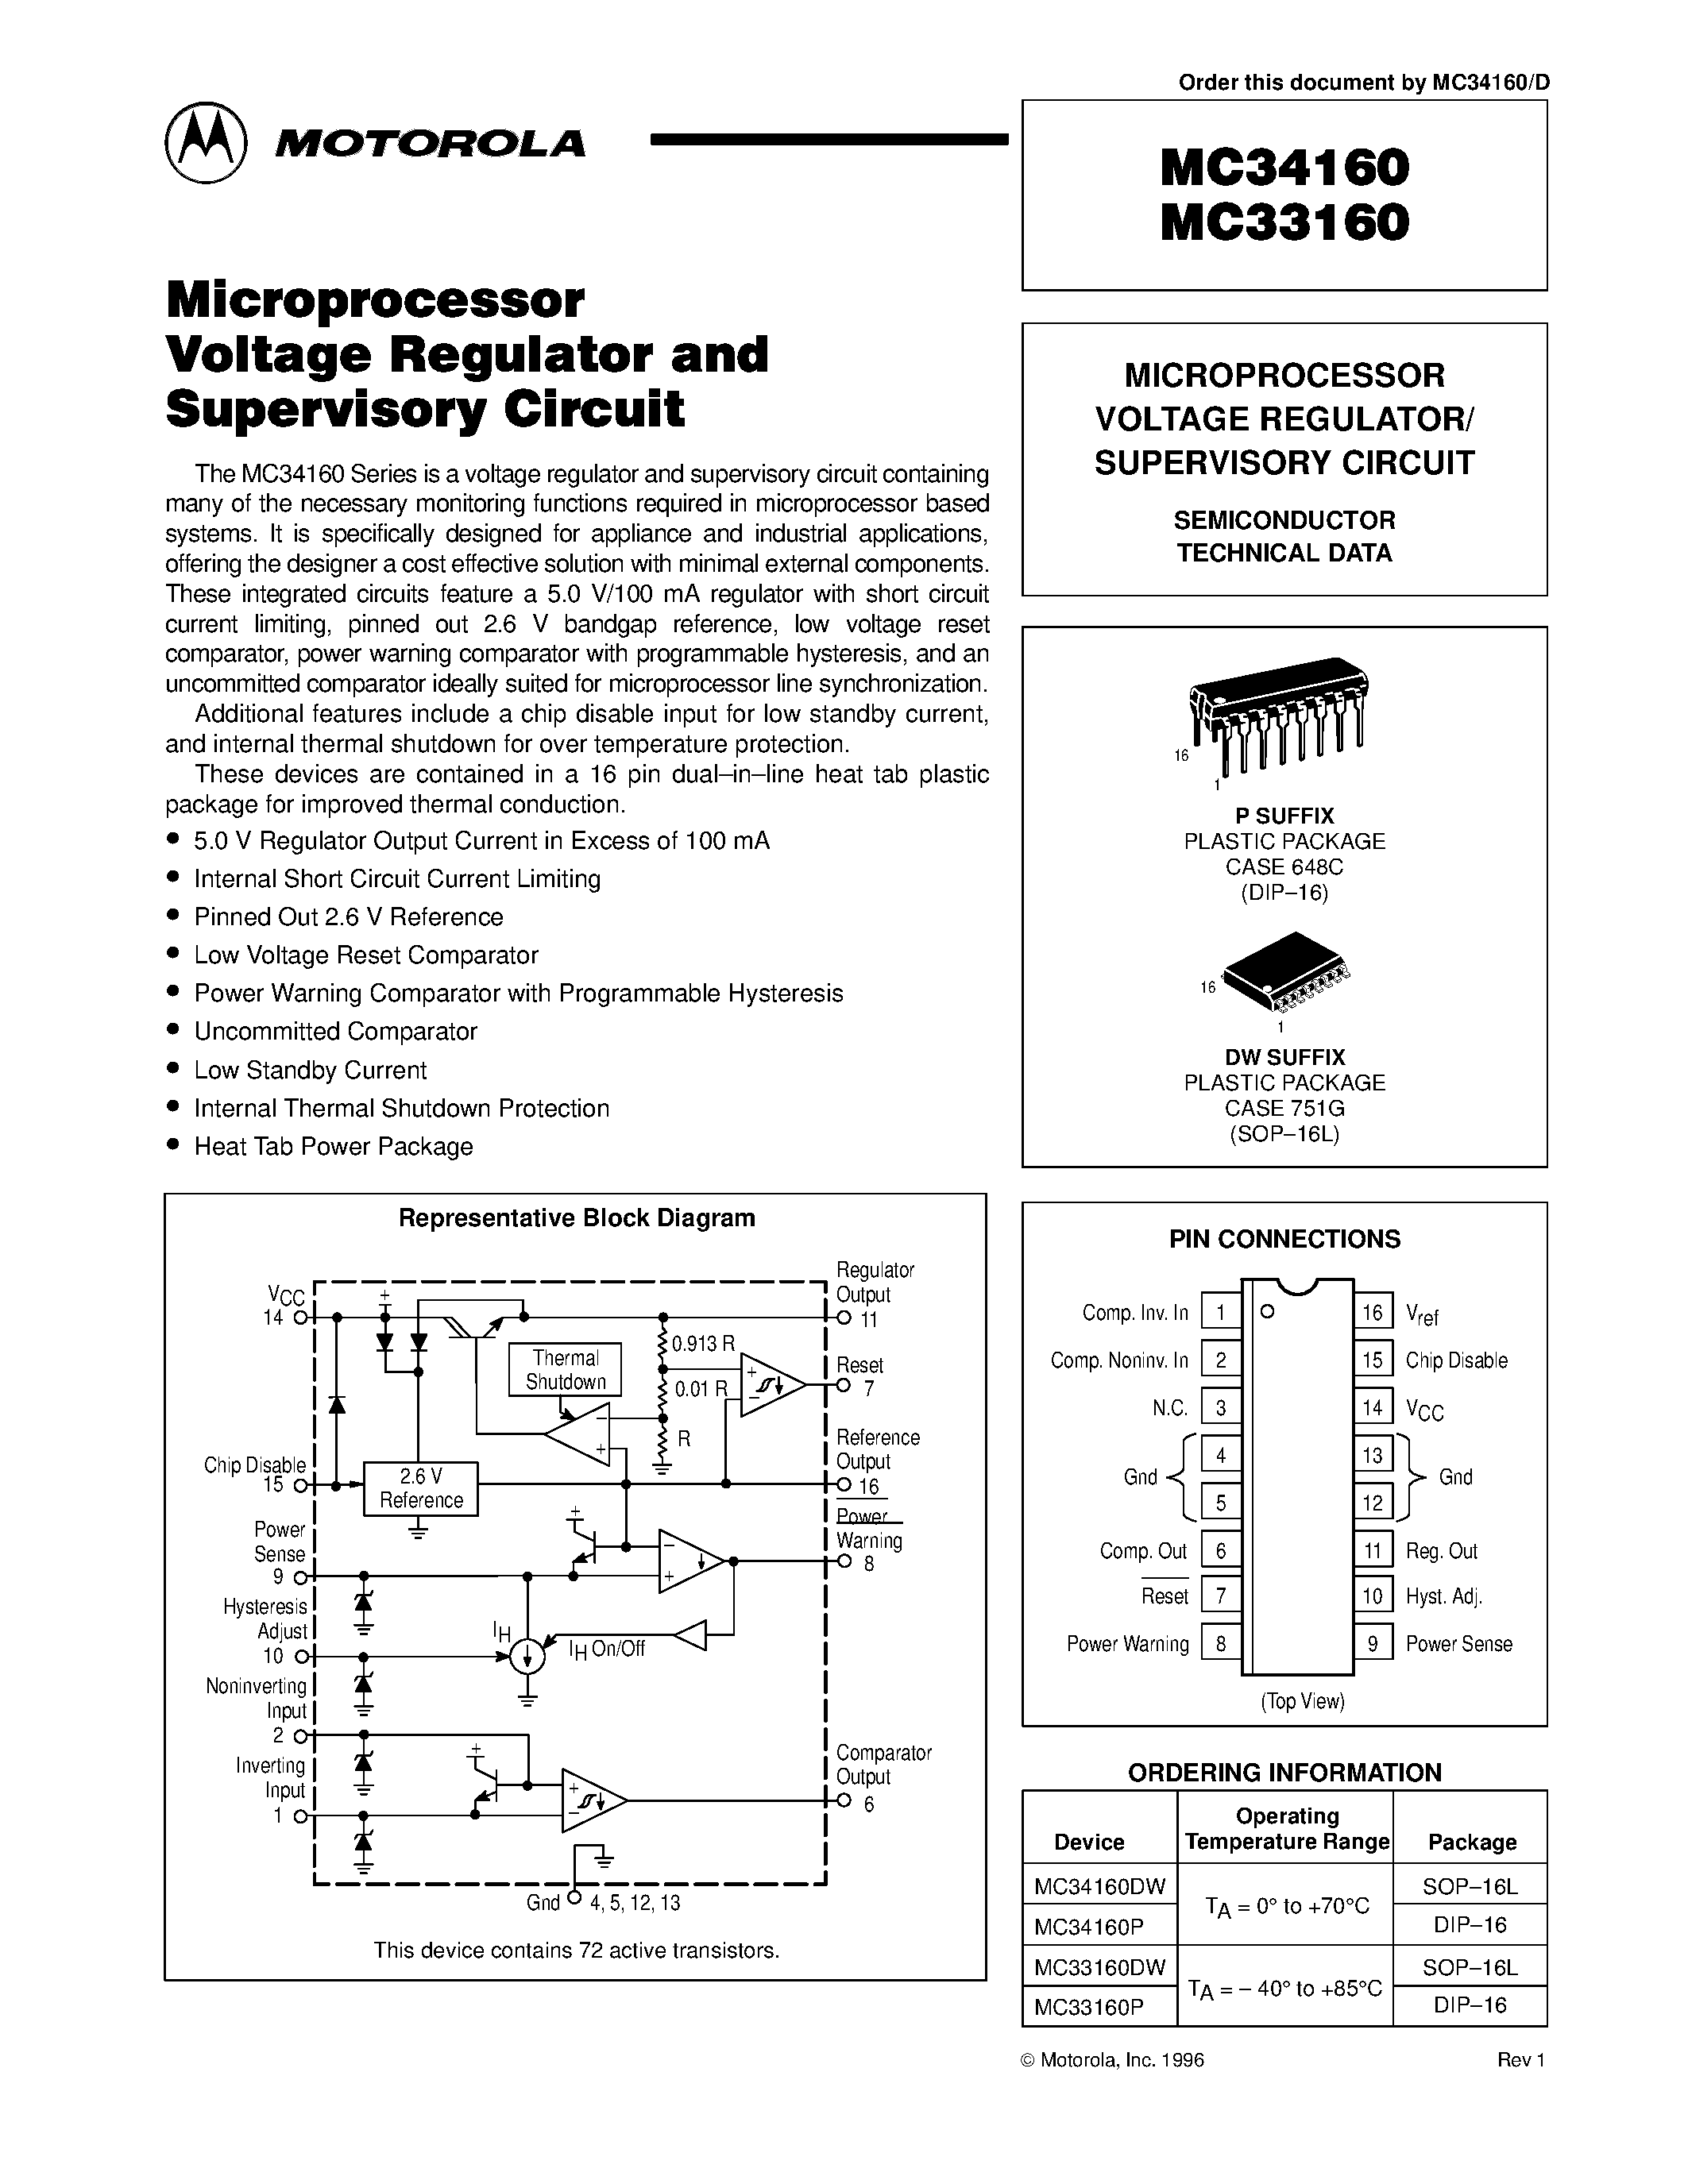 Даташит MC33160 - MICROPROCESSOR VOLTAGE REGULATOR/ SUPERVISORY CIRCUIT страница 1